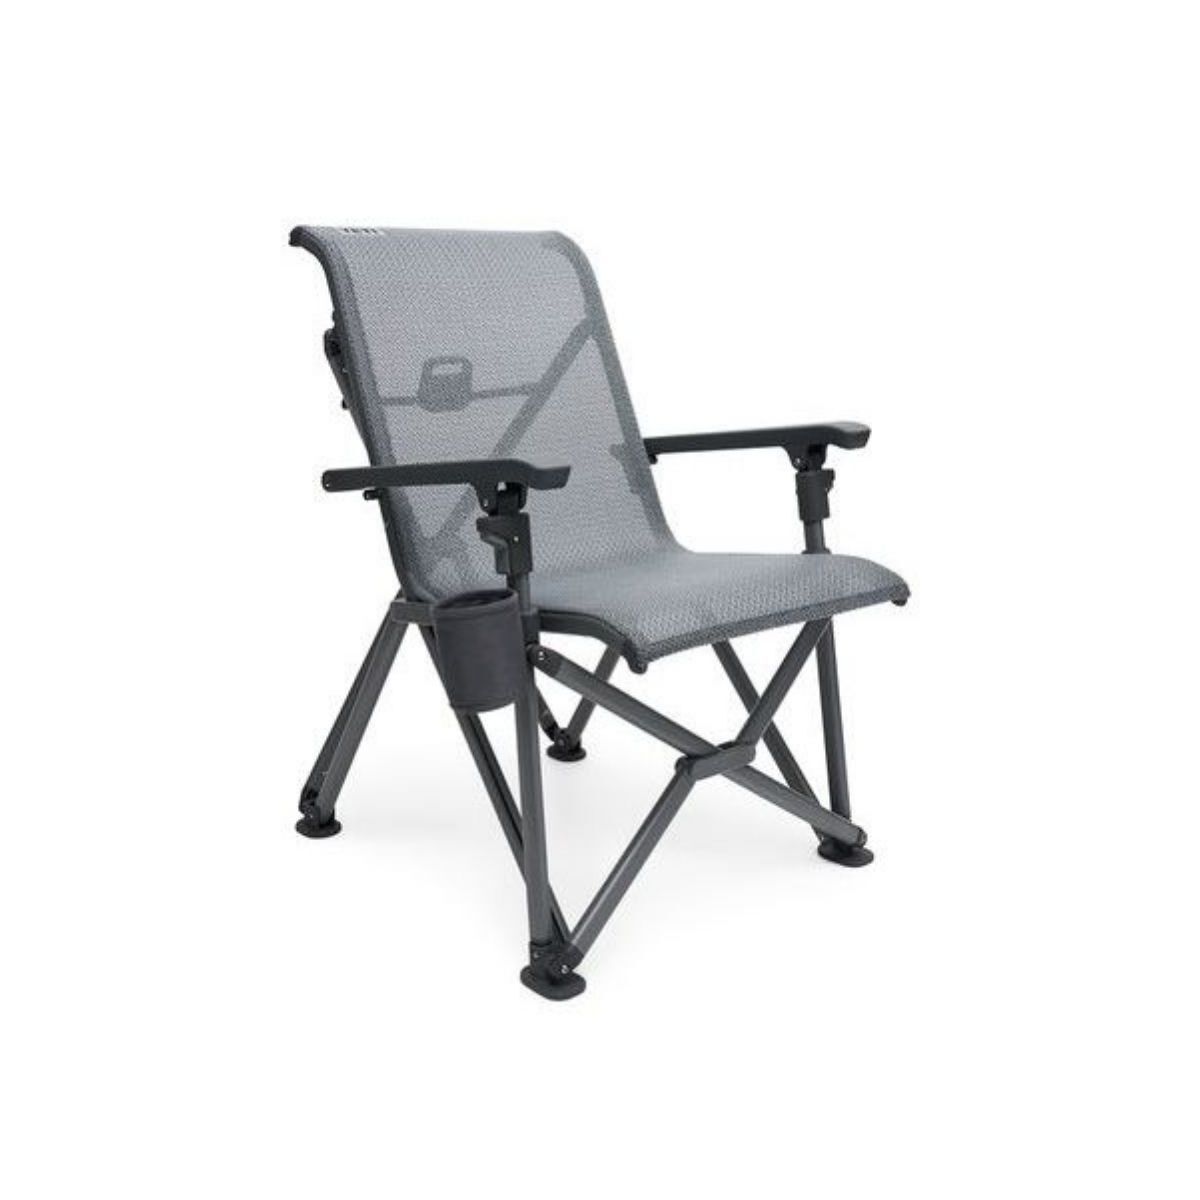 Yeti Trailhead Camp Chair - Campingstol